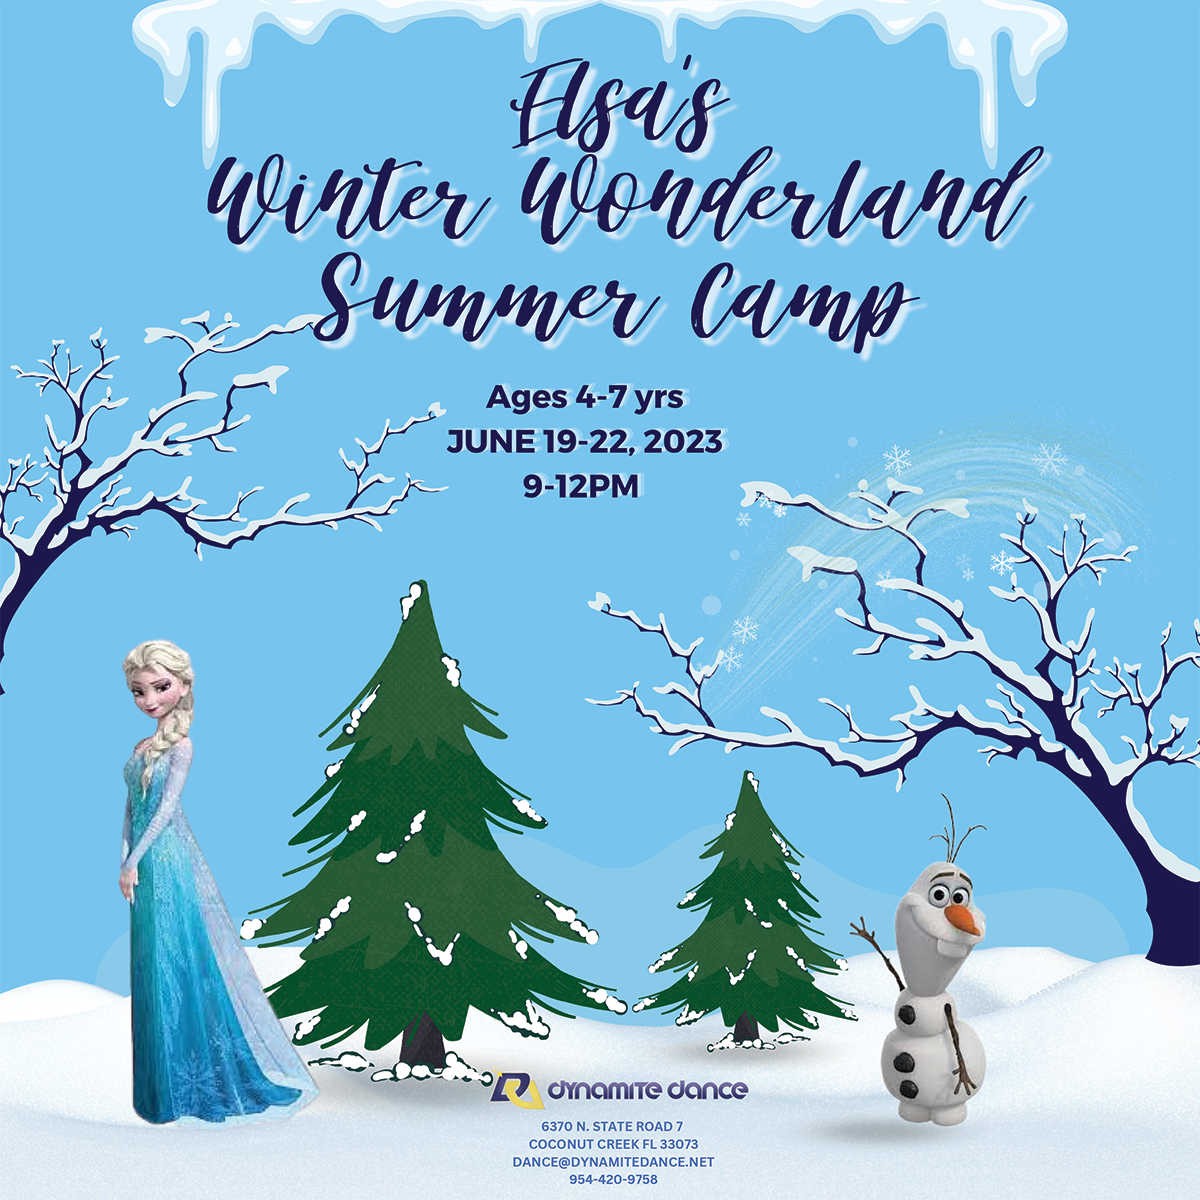 Elsa's Winter Wonderland Summer Camp